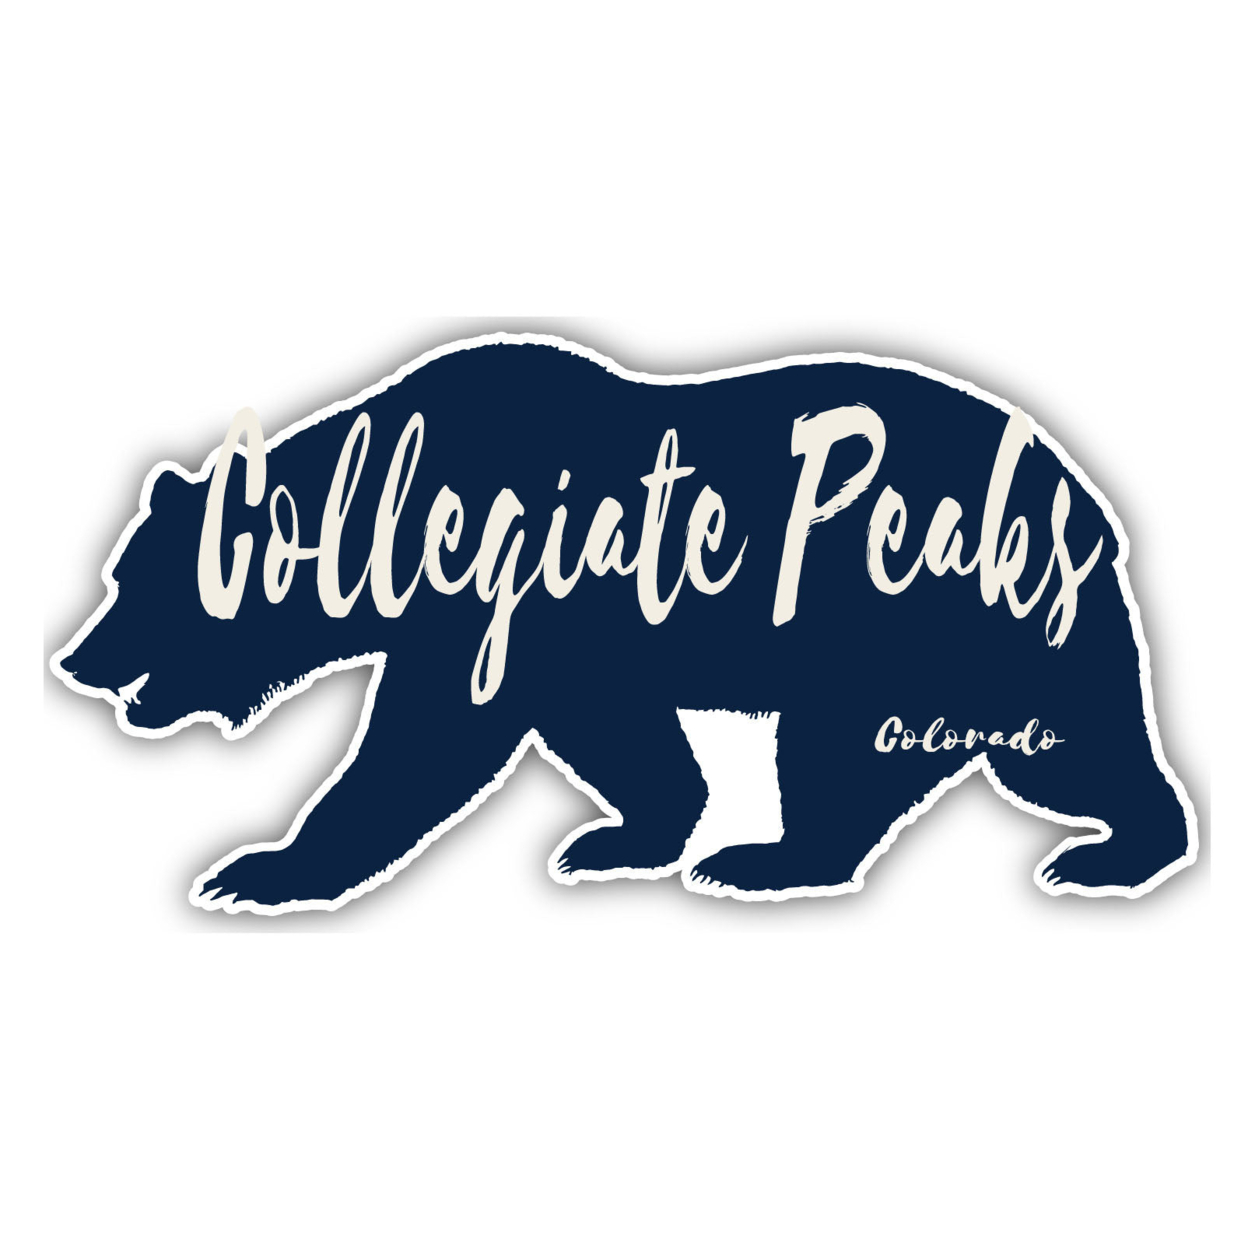 Collegiate Peaks Colorado Souvenir Decorative Stickers (Choose Theme And Size) - Single Unit, 6-Inch, Bear